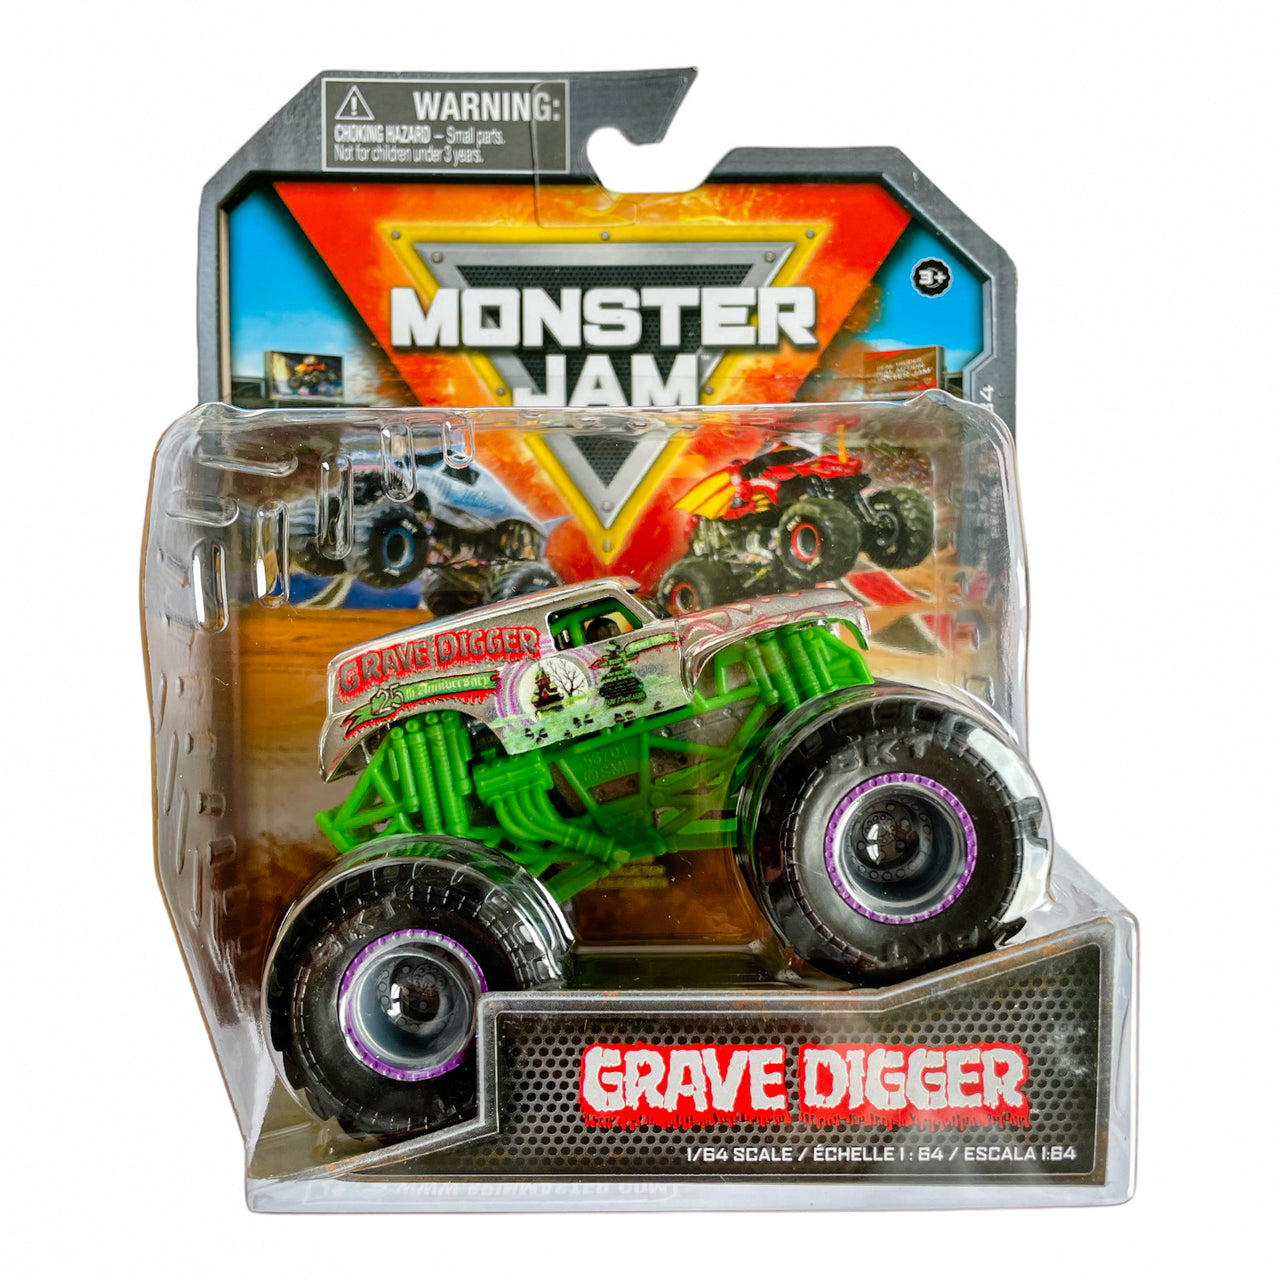 Monster Jam Die-Cast Vehicle 1:64 Scale Grave Digger Monster Jam